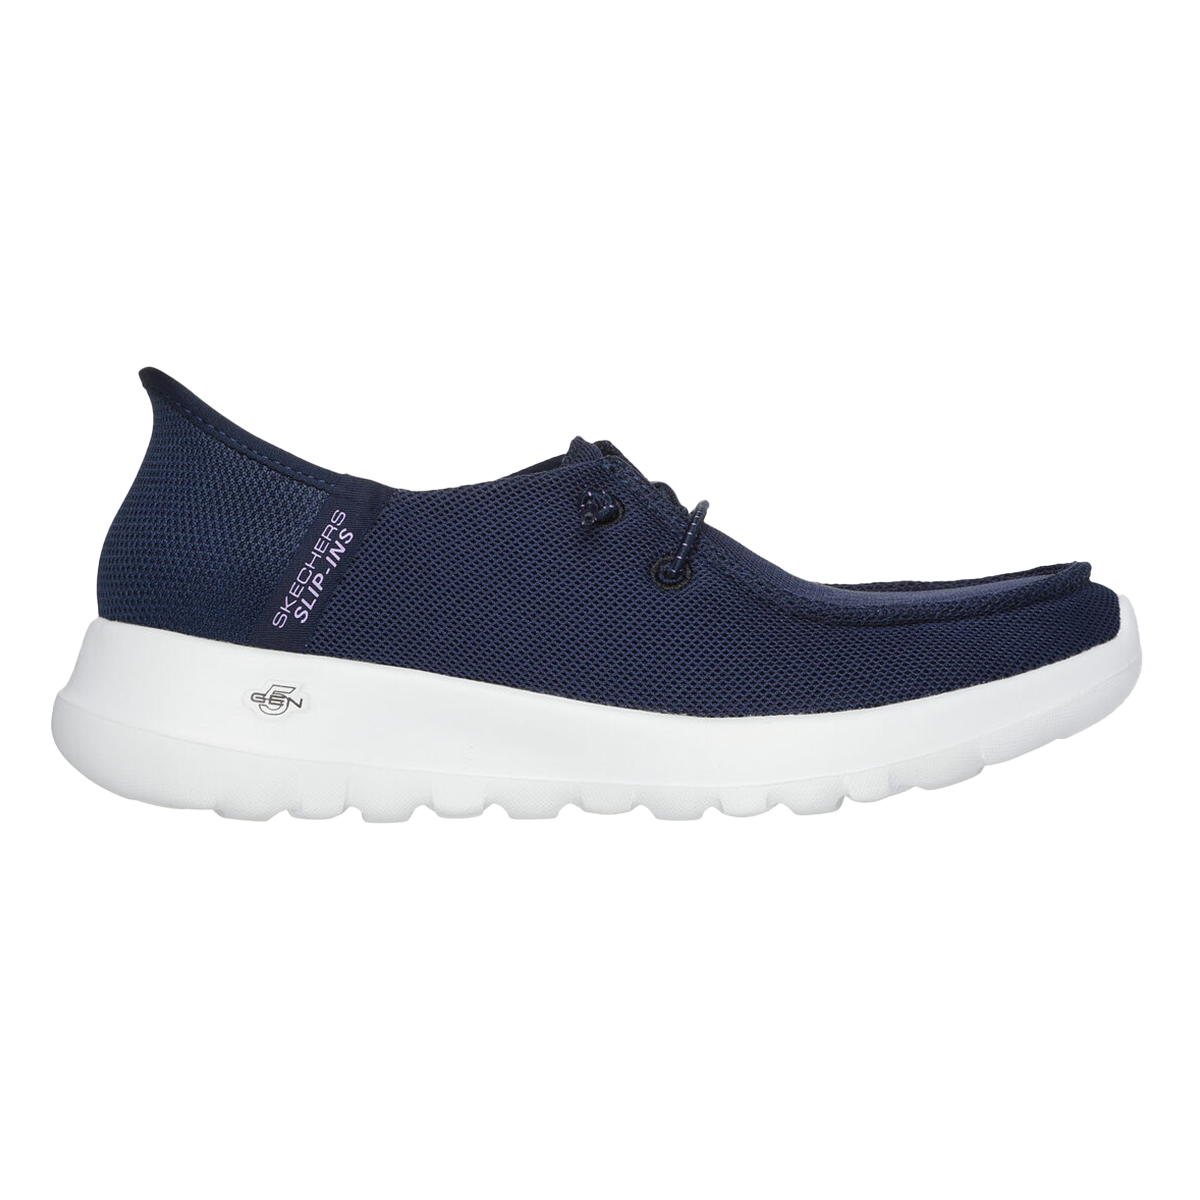 Skechers Women's Go Walk Joy - Idalis Shoes in Navy Textile/Lavender Trim   Size: 8.5 Width: B   Fit2Run